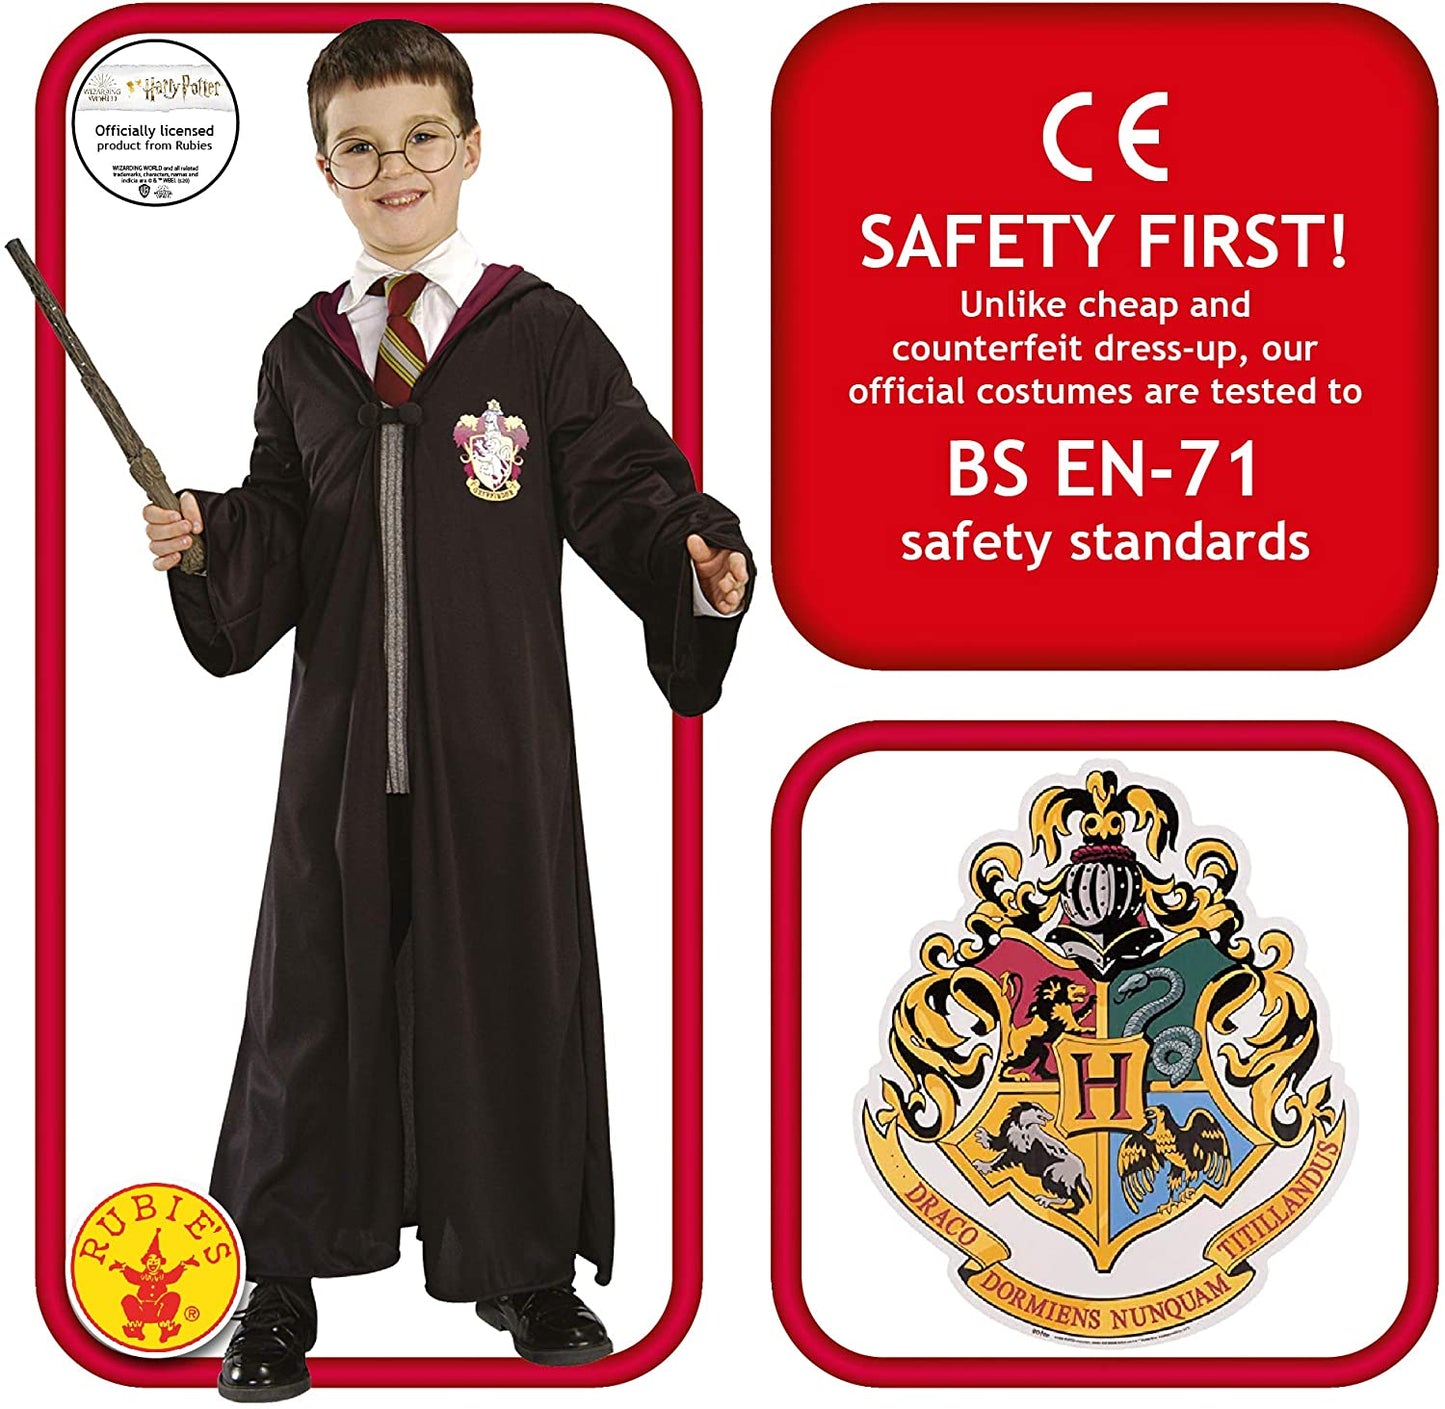 Harry Potter Child Costume Kit Medium  8 - 10